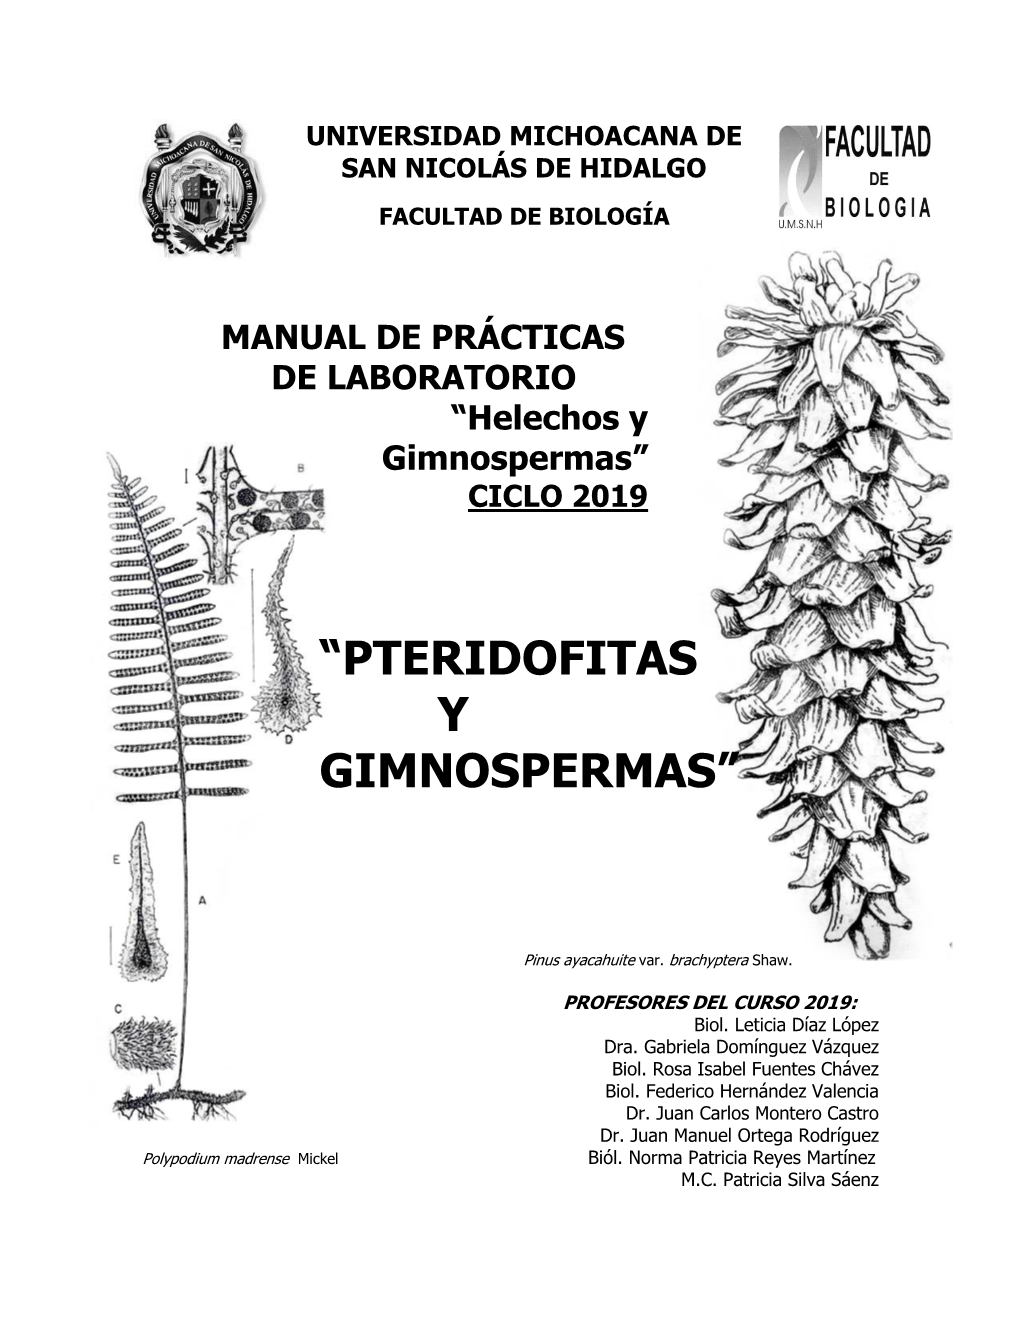 Pteridofitas Y Gimnospermas”